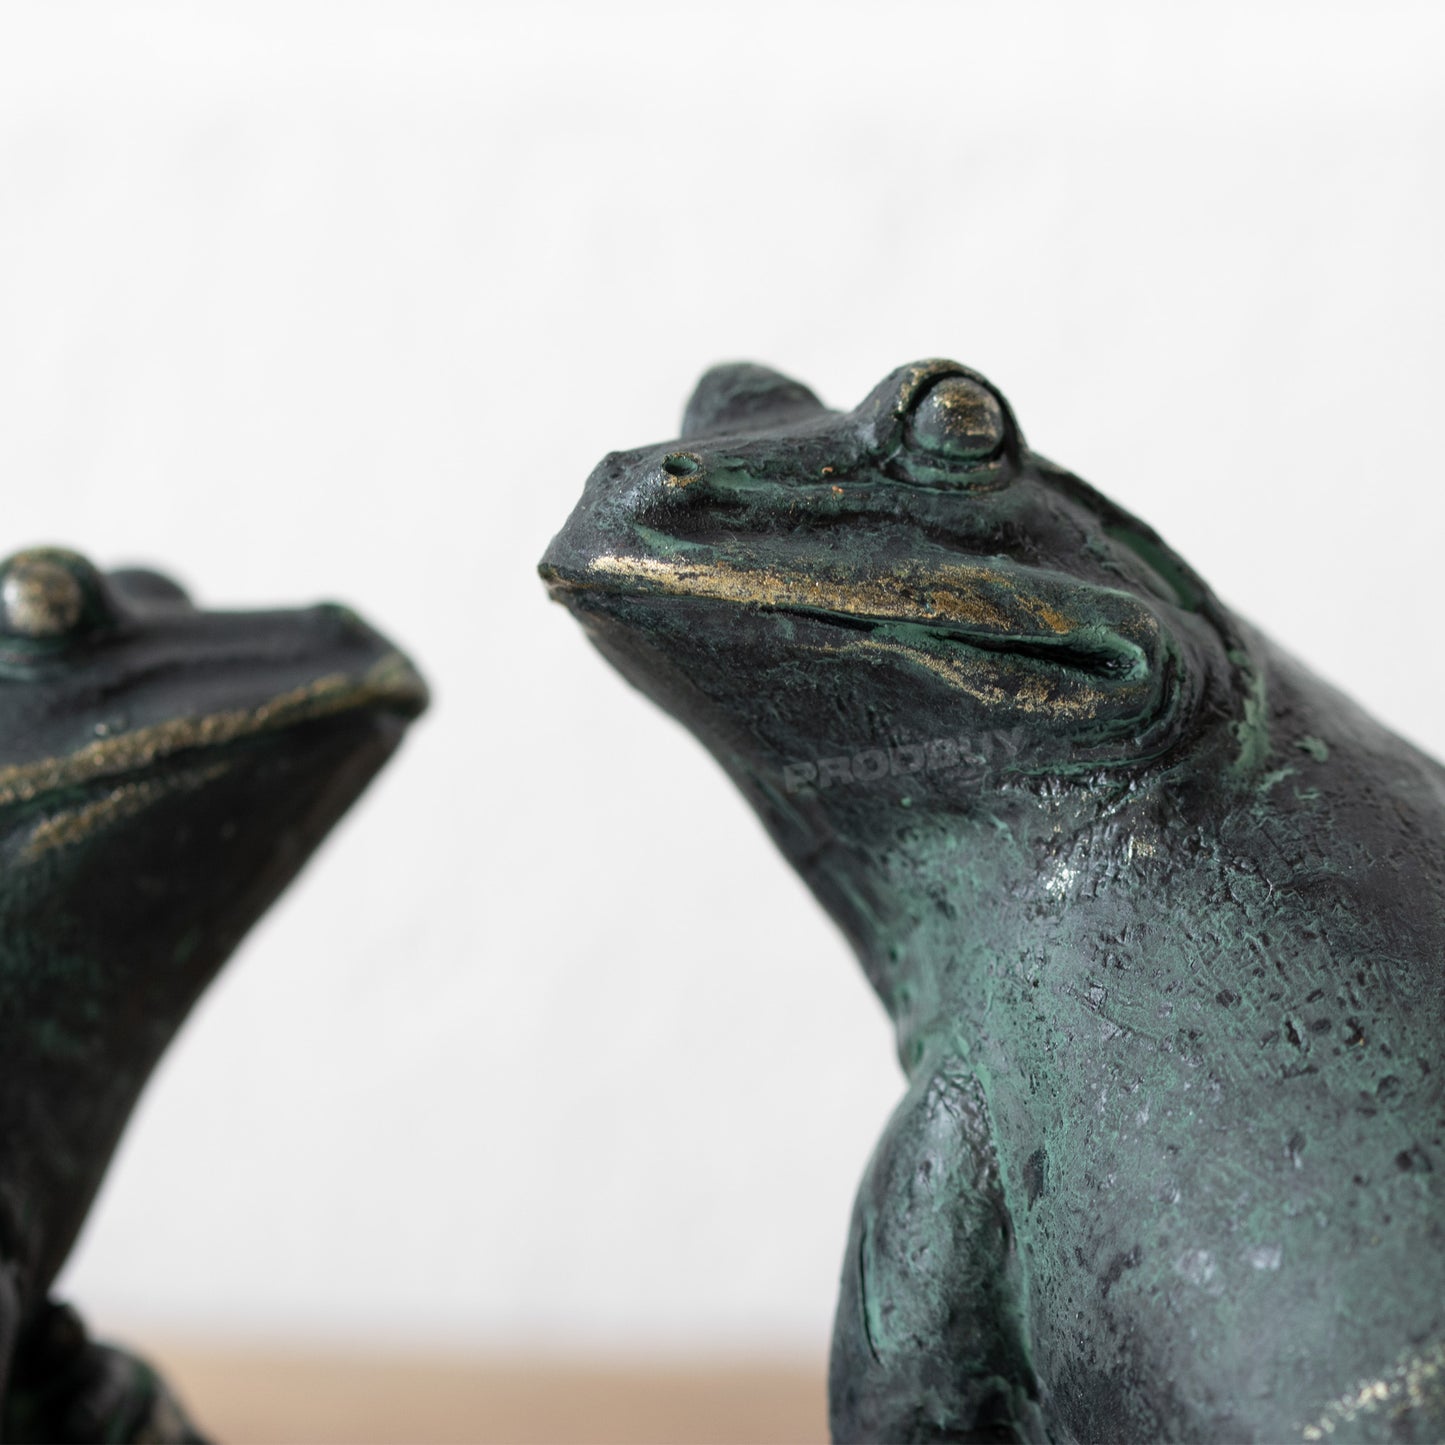 Set of 2 Climbing Frogs Sitting Sculptures Shelf Sitters